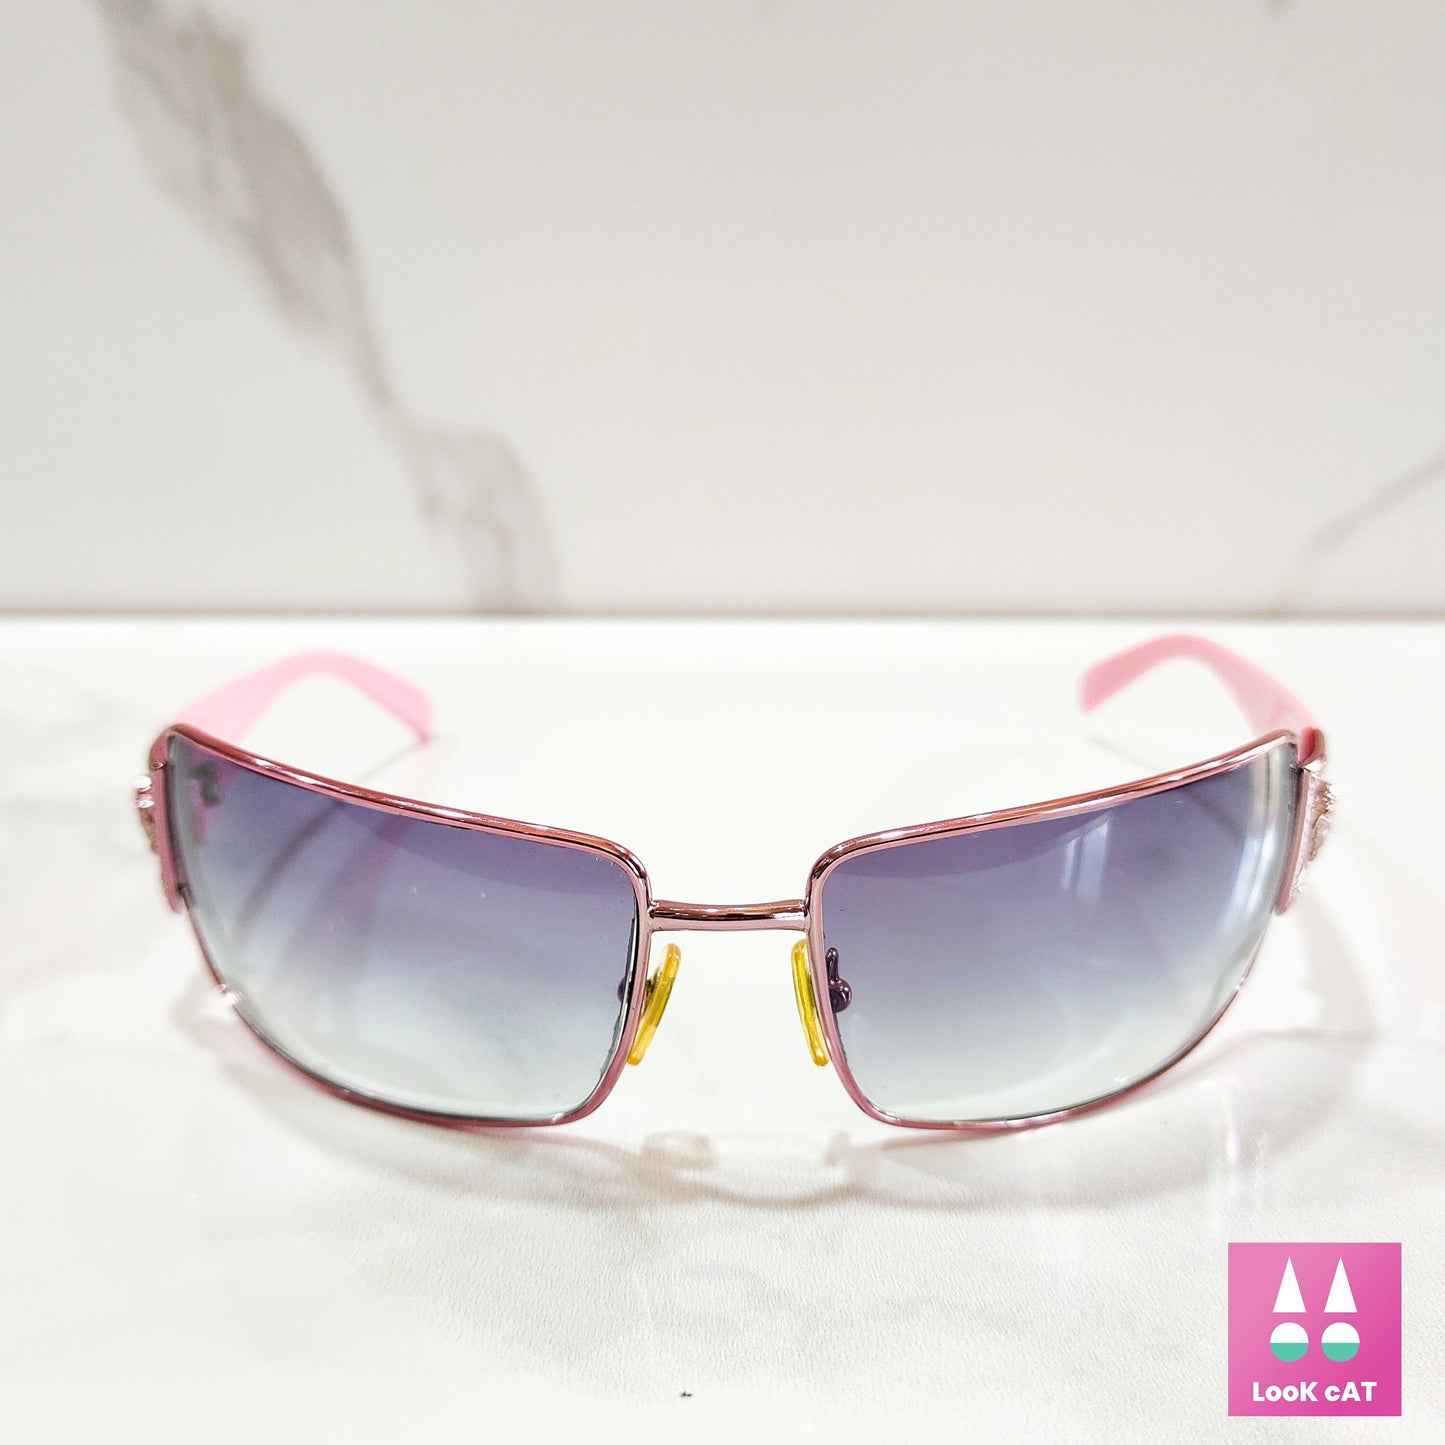 Versace 2032 occhiali da sole vintage rosa avvolgente scudo occhiali gafas anni '90 y2k